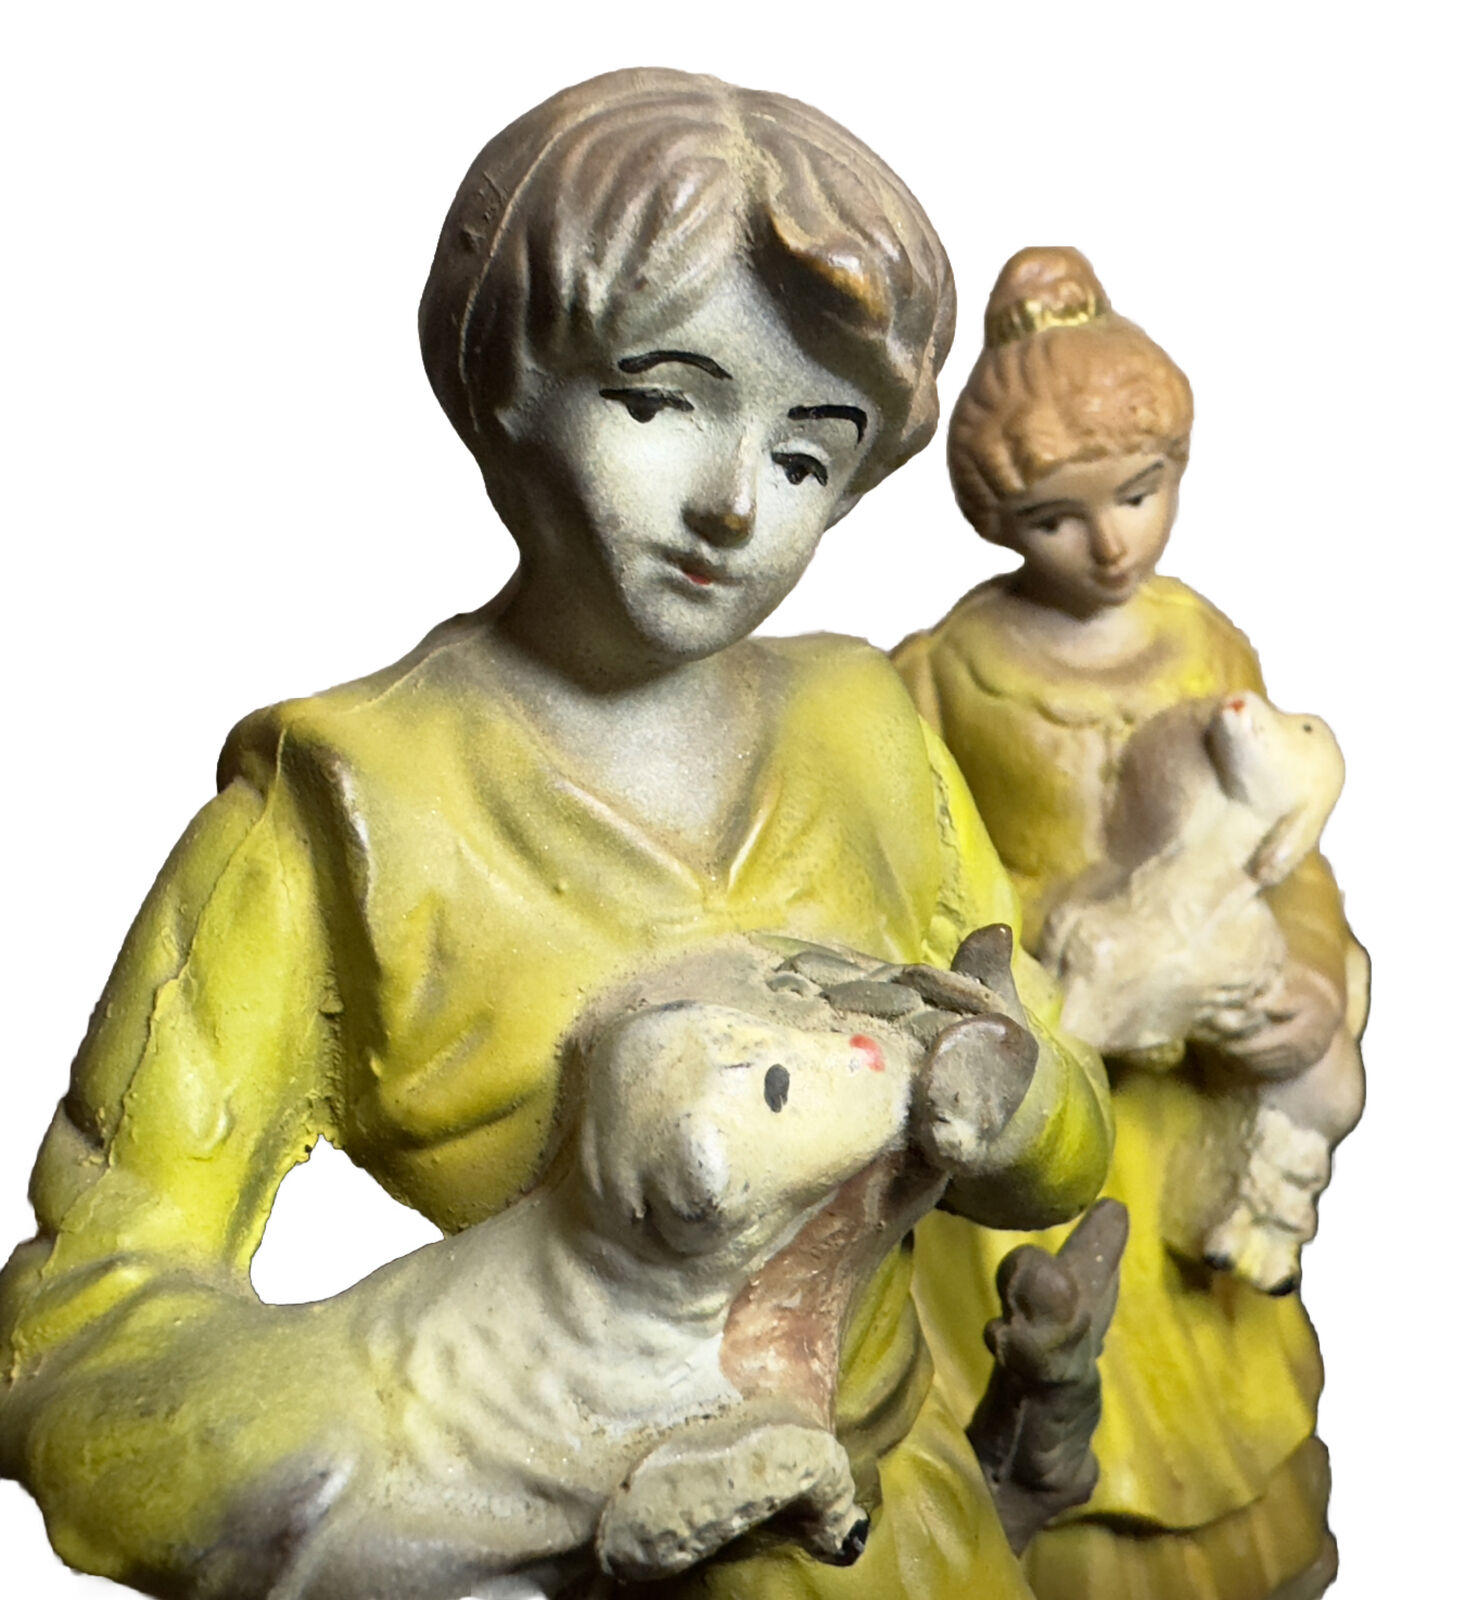 Vintage Victorian Couple Figurines, Ceramic Statues 9” & 7.5”